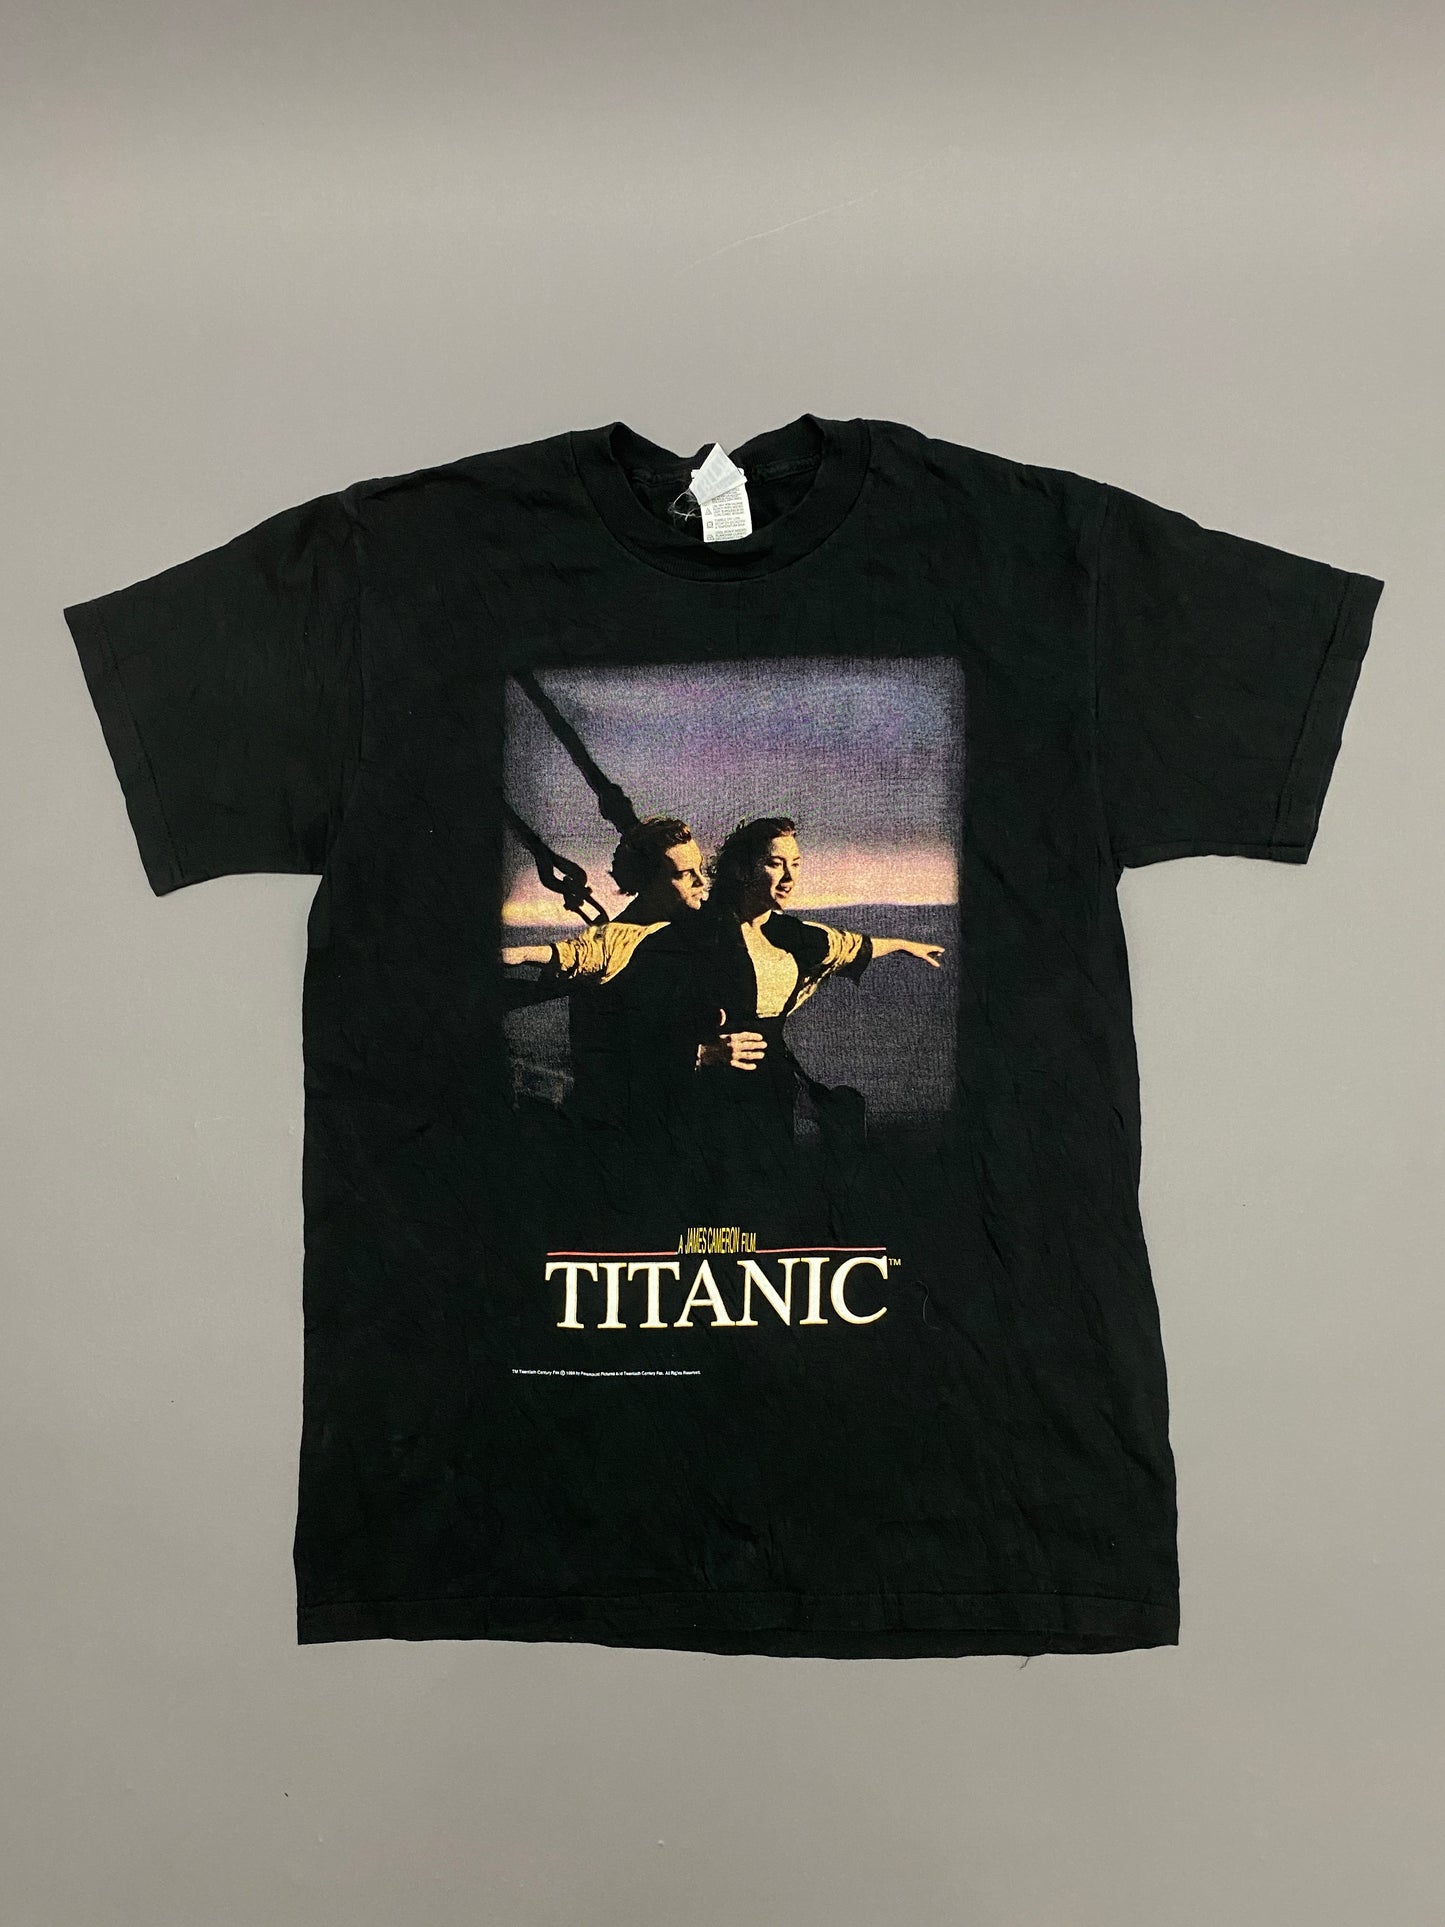 Titanic 1998 Vintage T-shirt